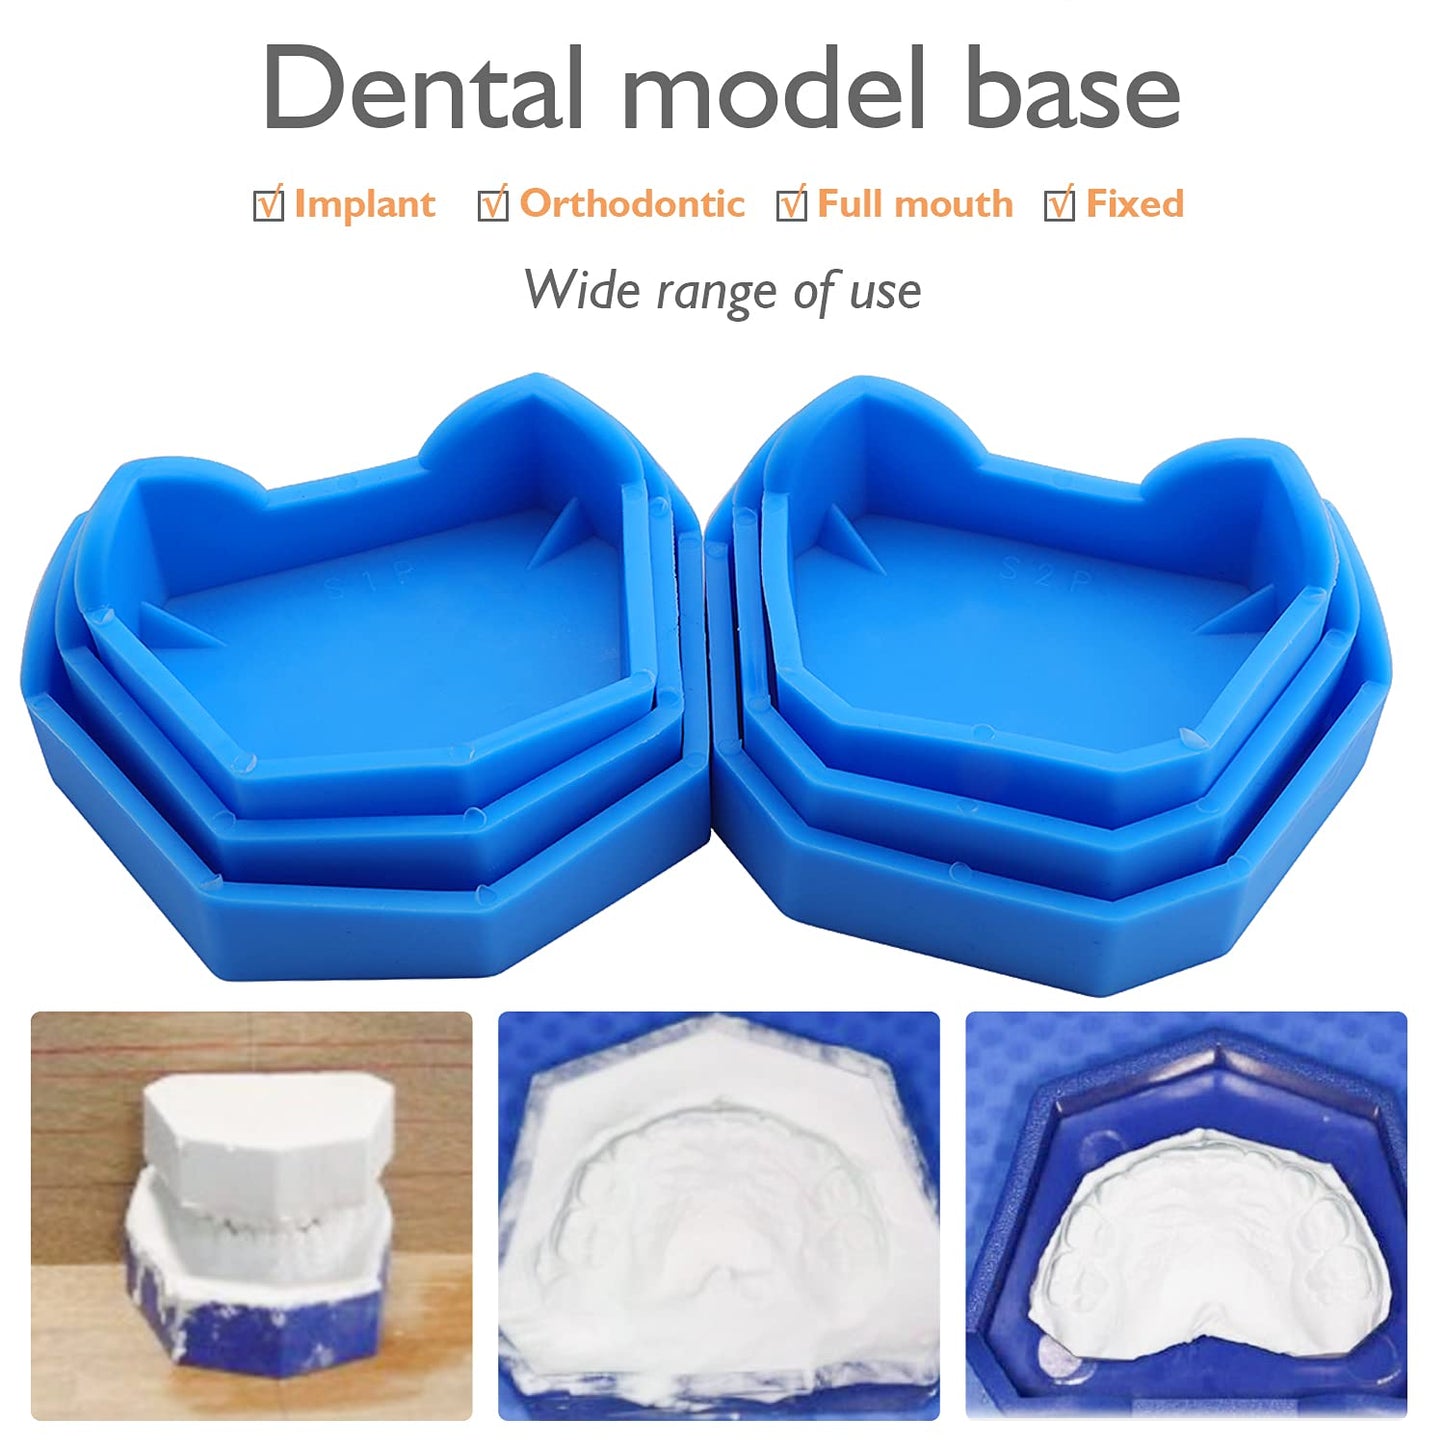 Dental Model Base Former Impression Trays Base Molds Silicone Dental Lab Use for Cast Trimming S/M/L (6pcs)